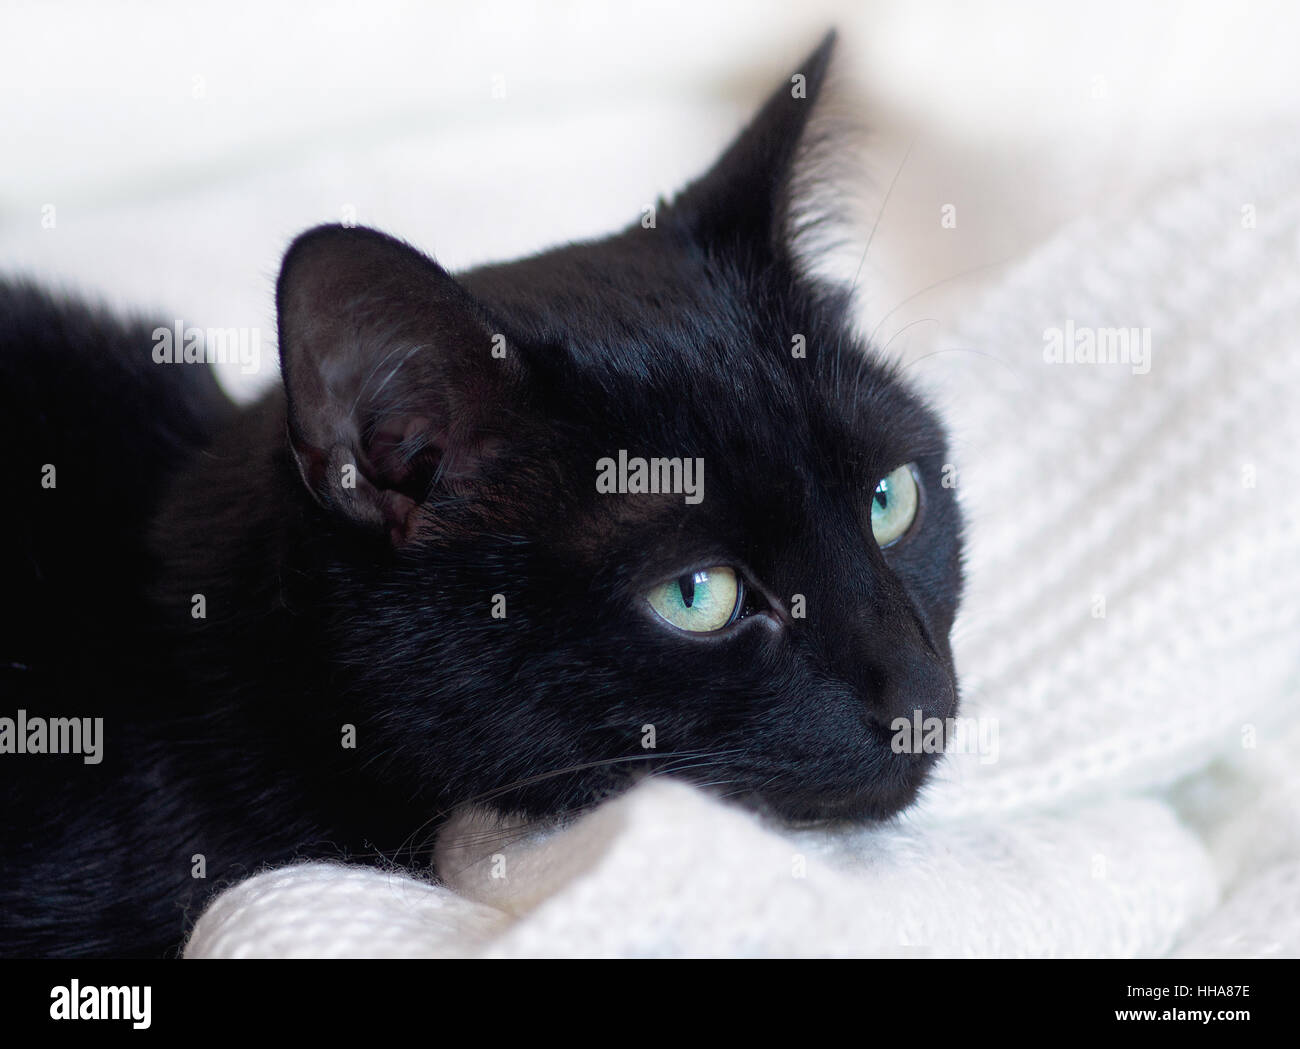 Gato negro sobre blanco ropa deja el pelo. Foto de stock